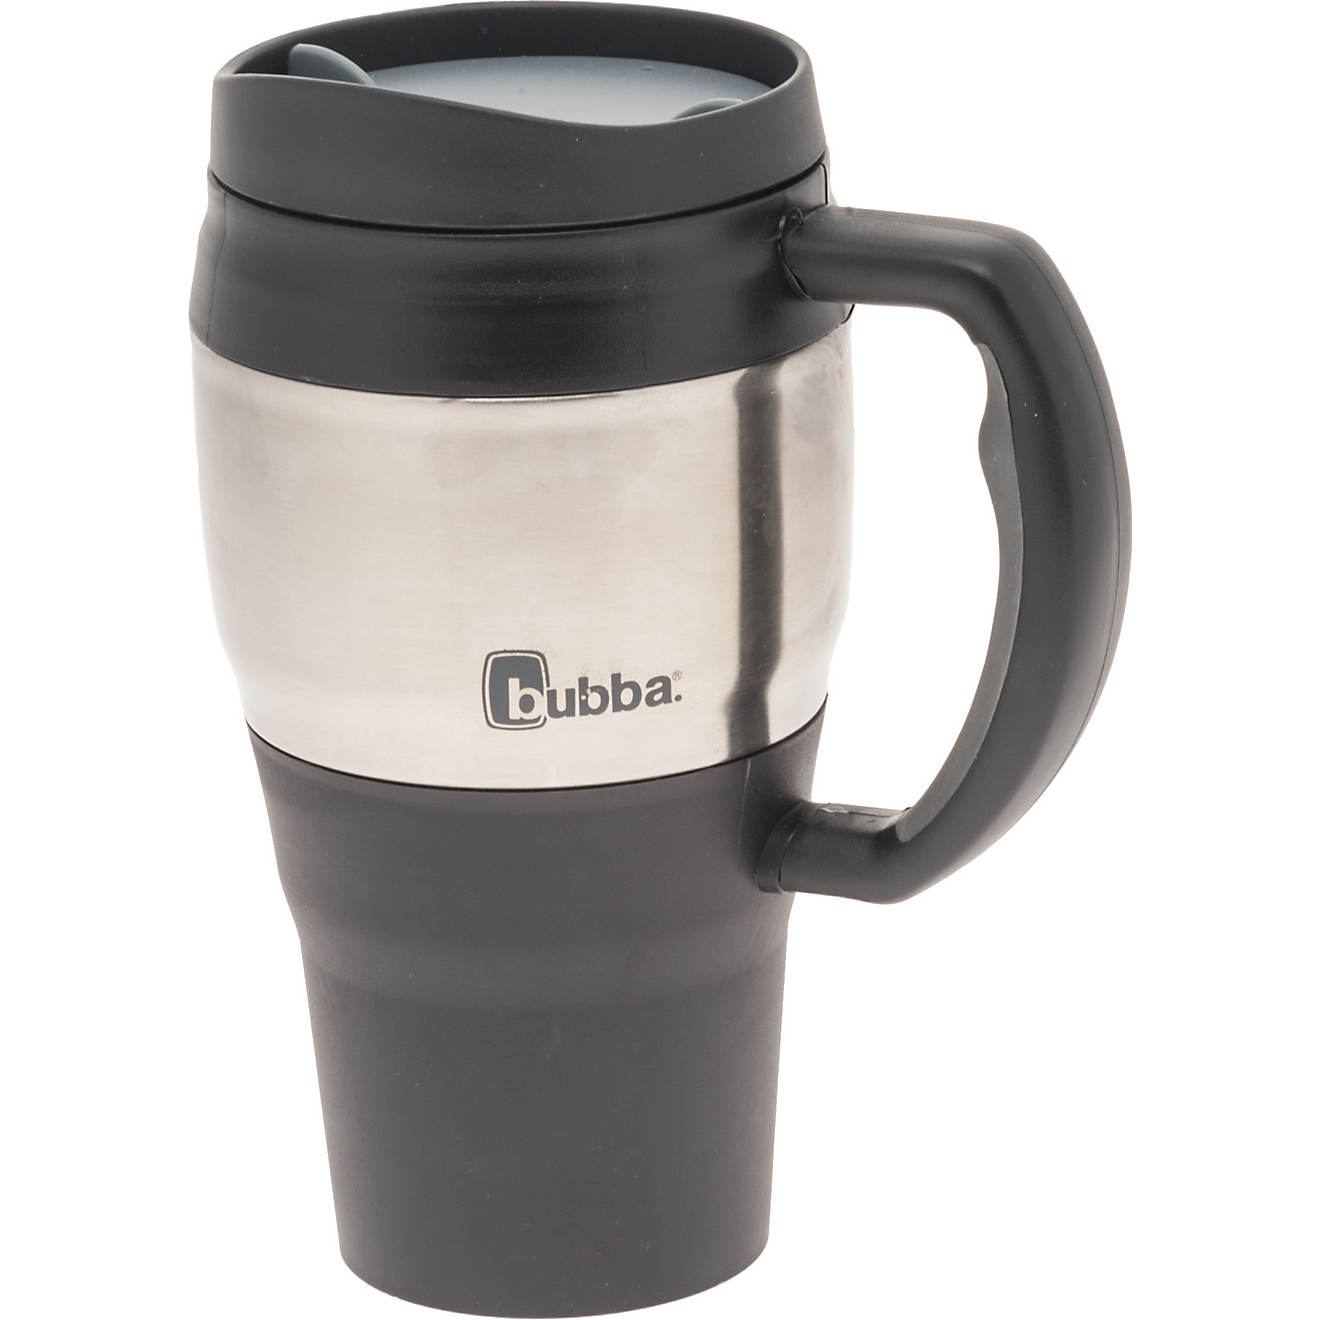 bubba travel mug 20 oz